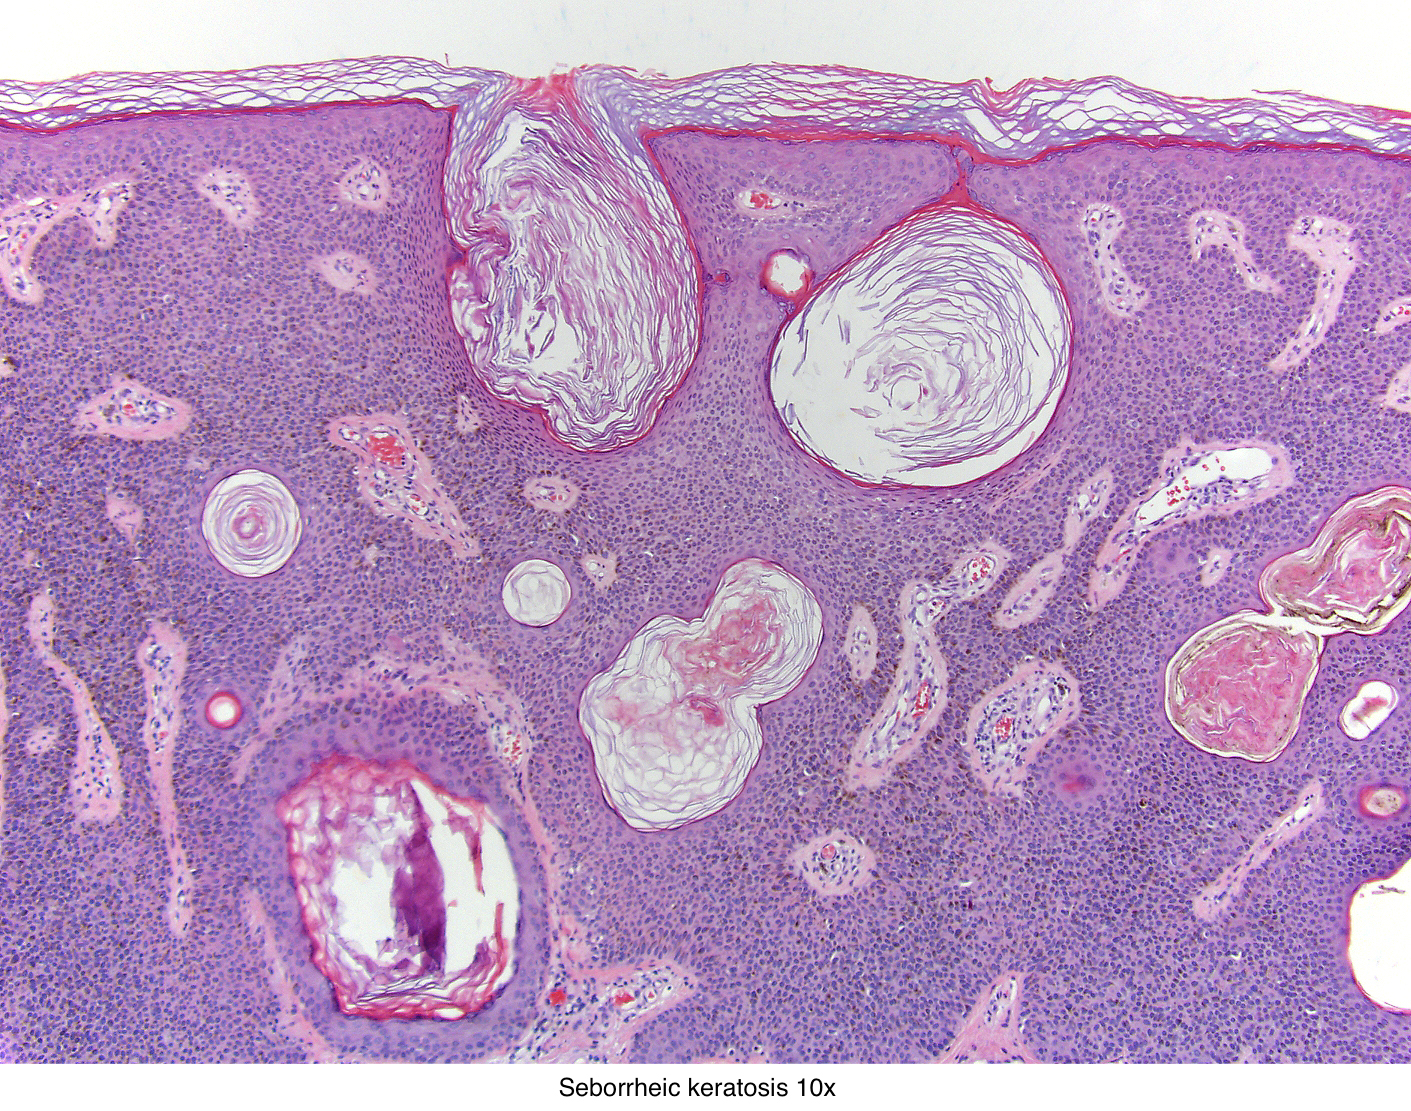 squamous papilloma vs seborrheic keratosis